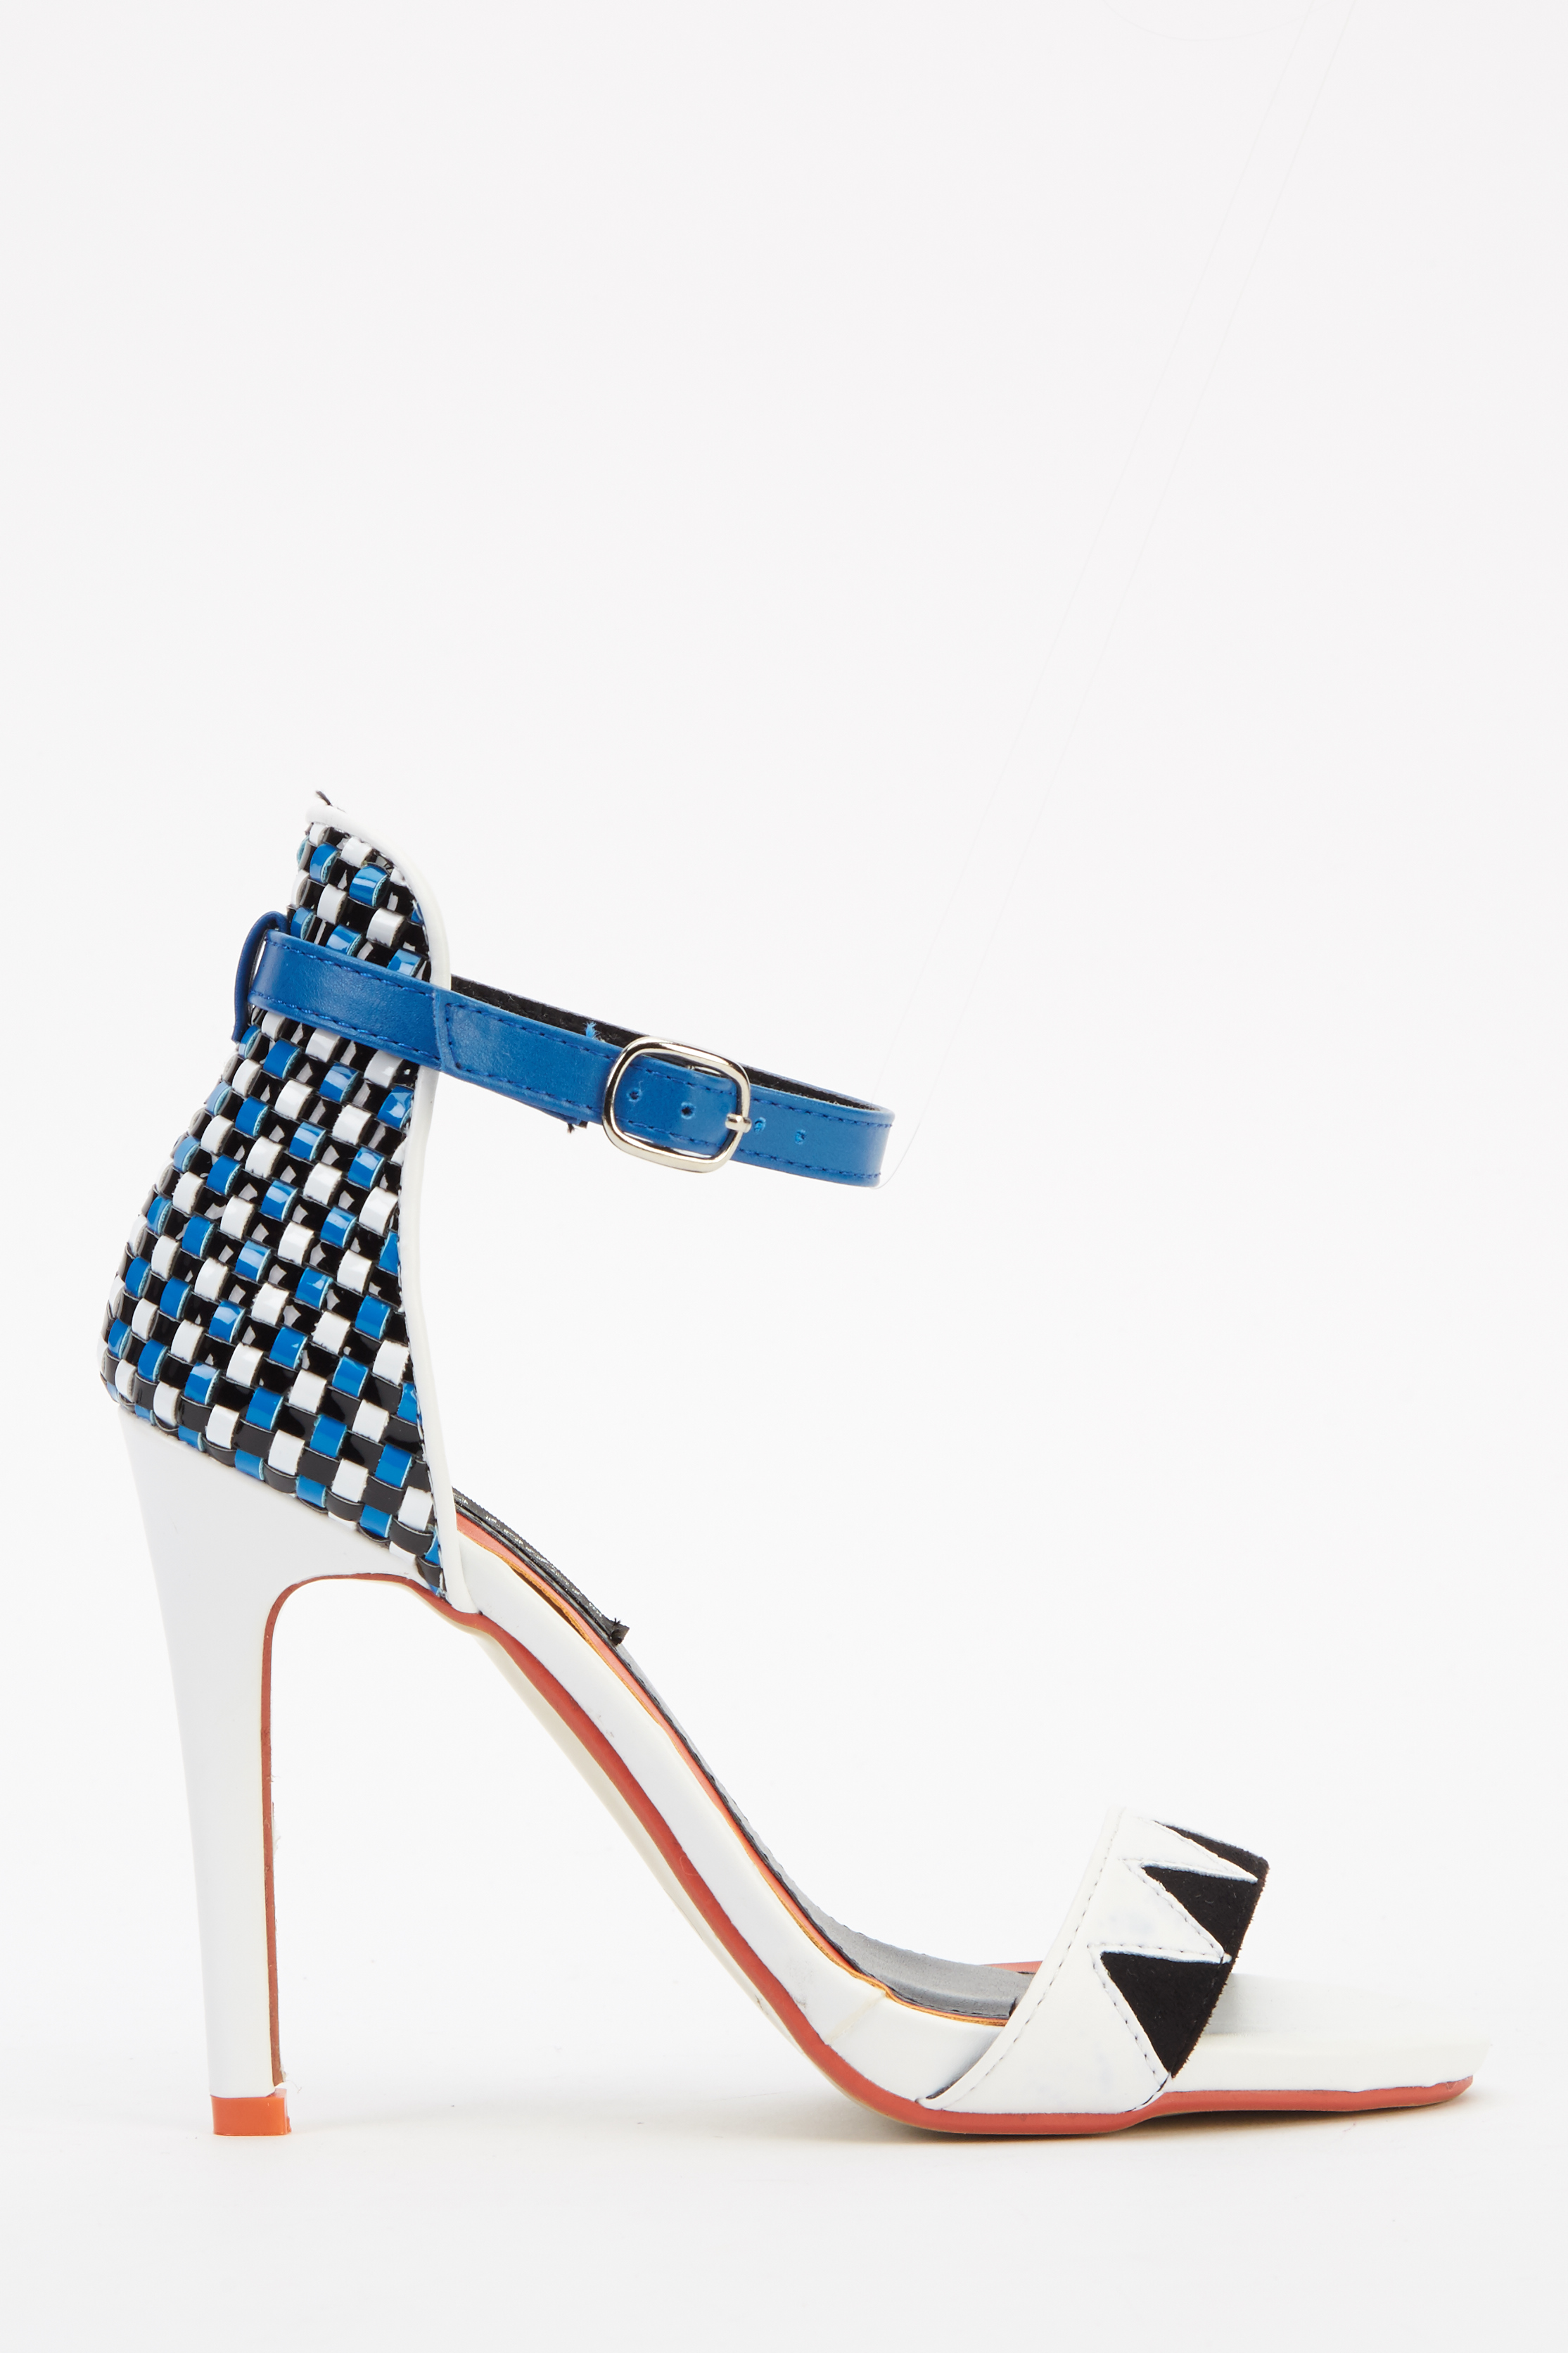 Sergio Todzi Blue Detailed Sandal Heels - Limited edition | Discount ...